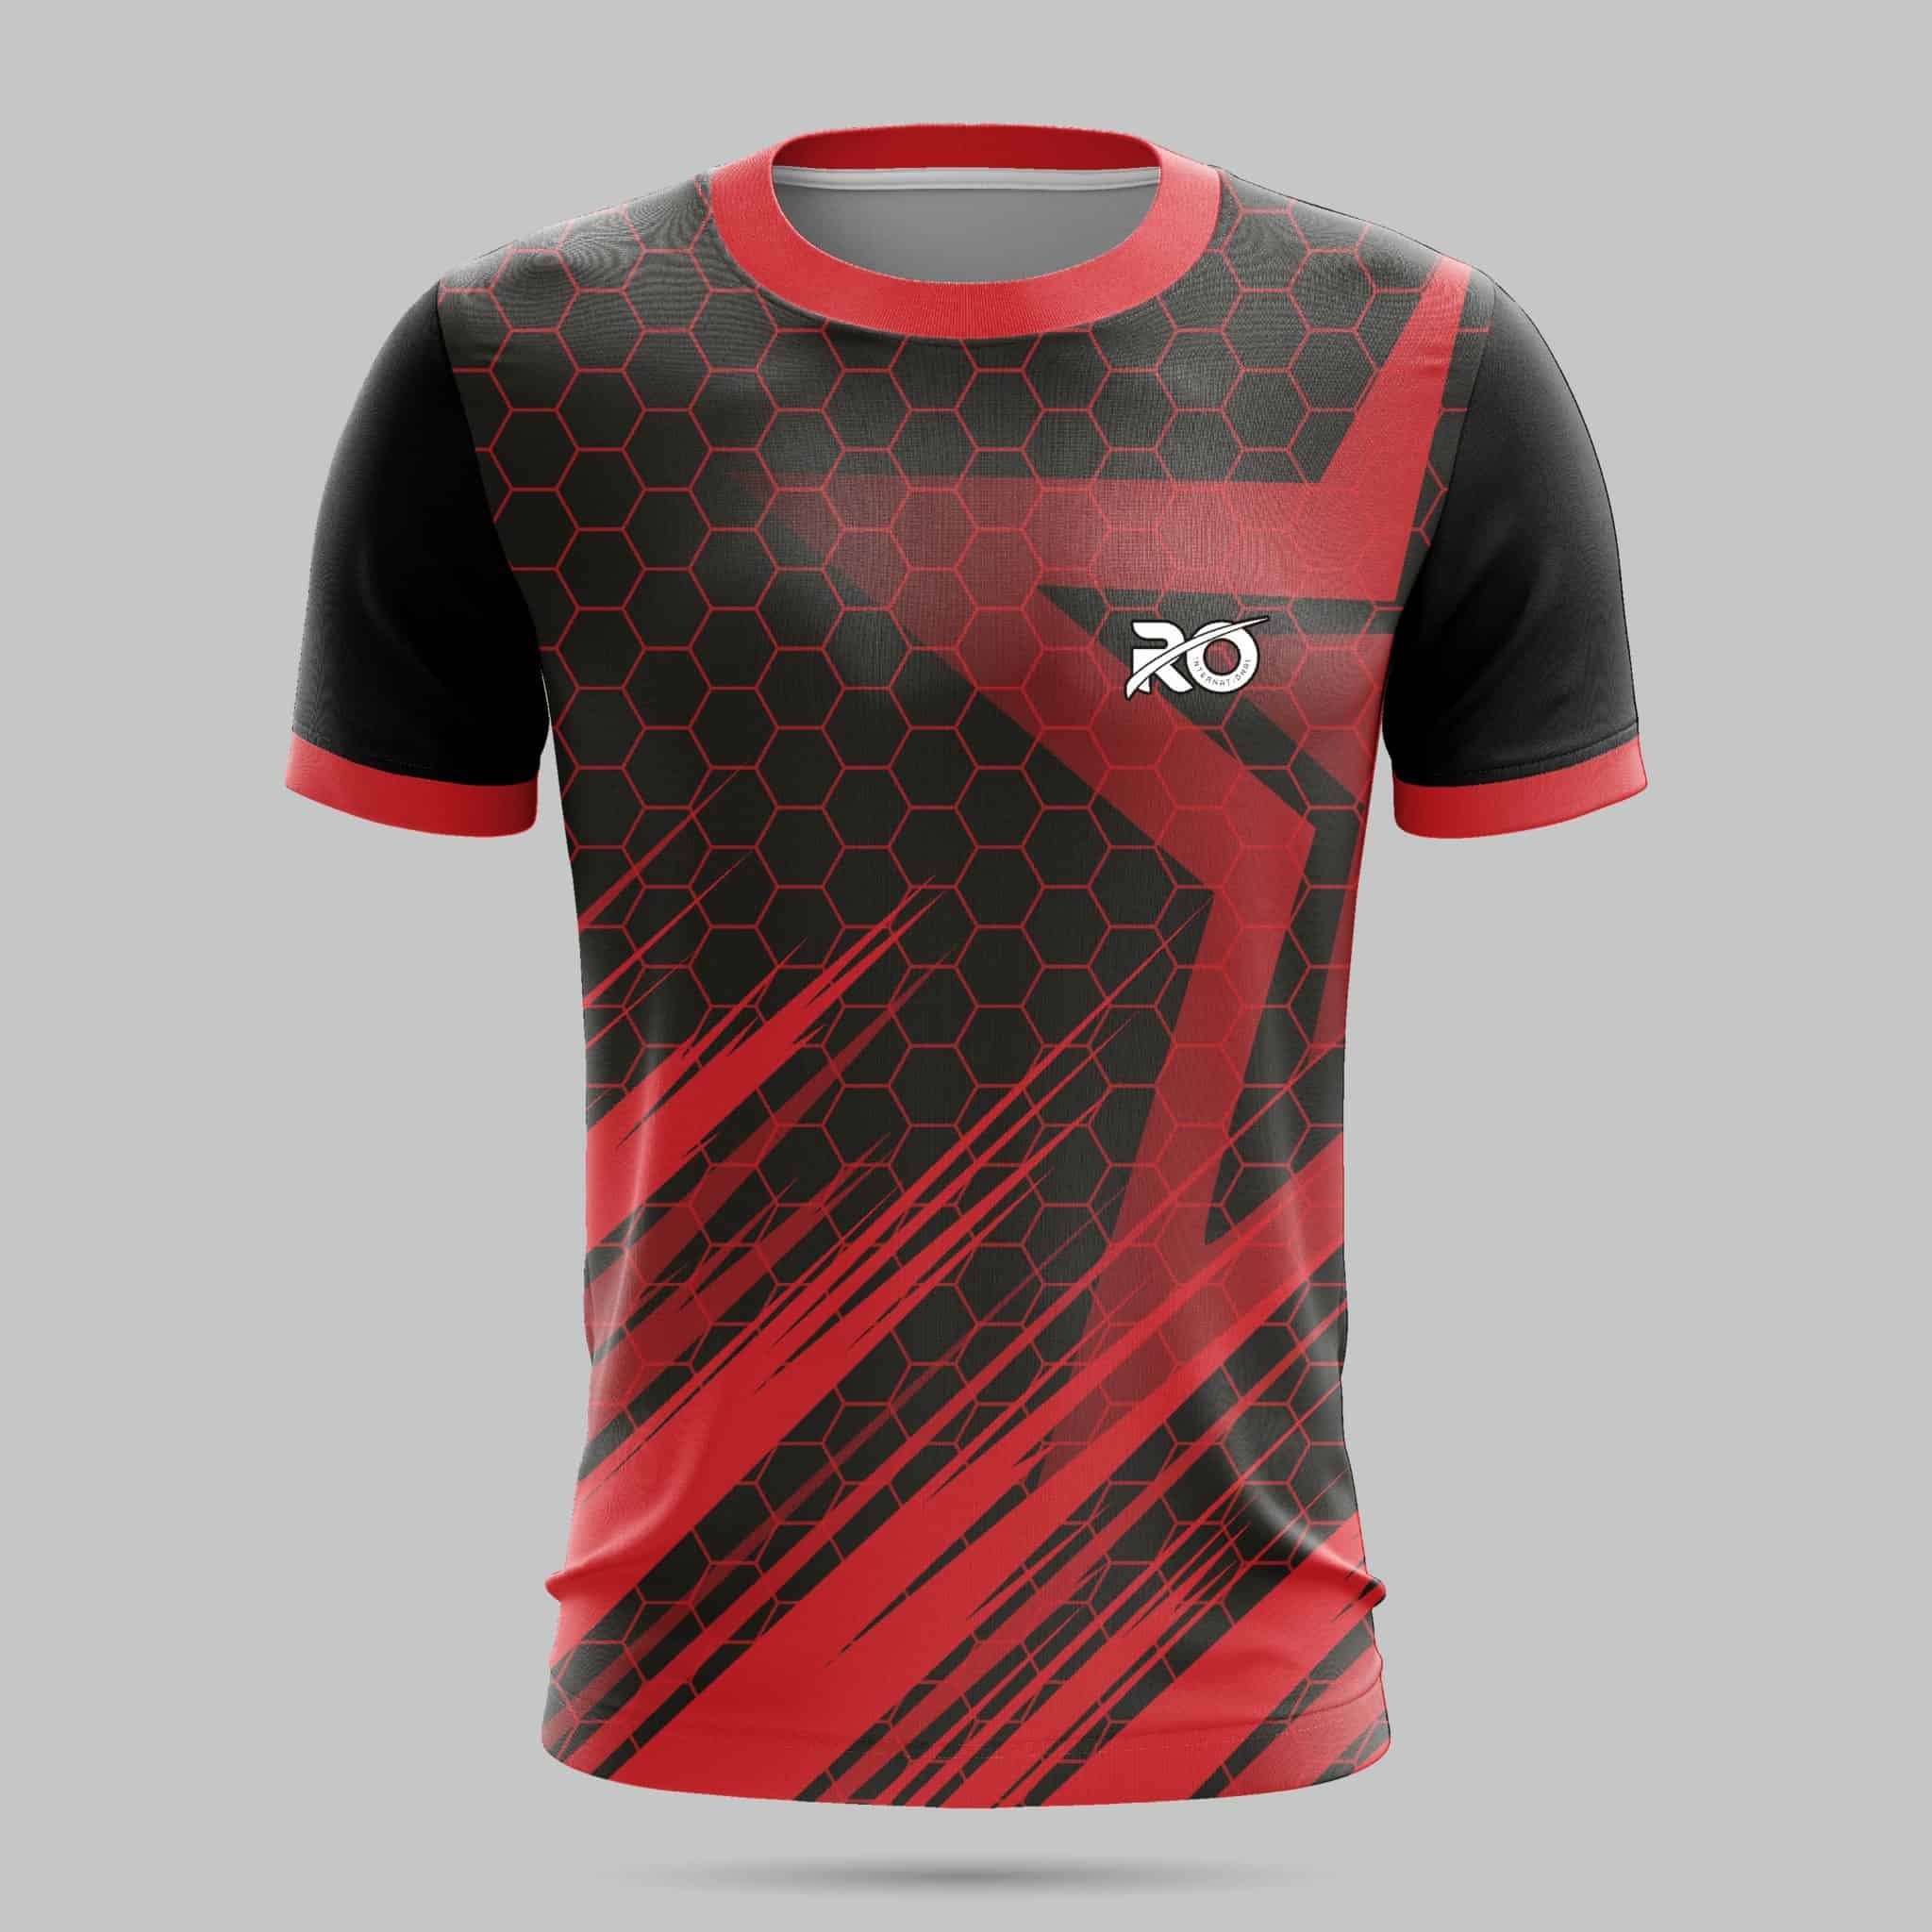 Ro Sports Jersey Set Red Black - RO International